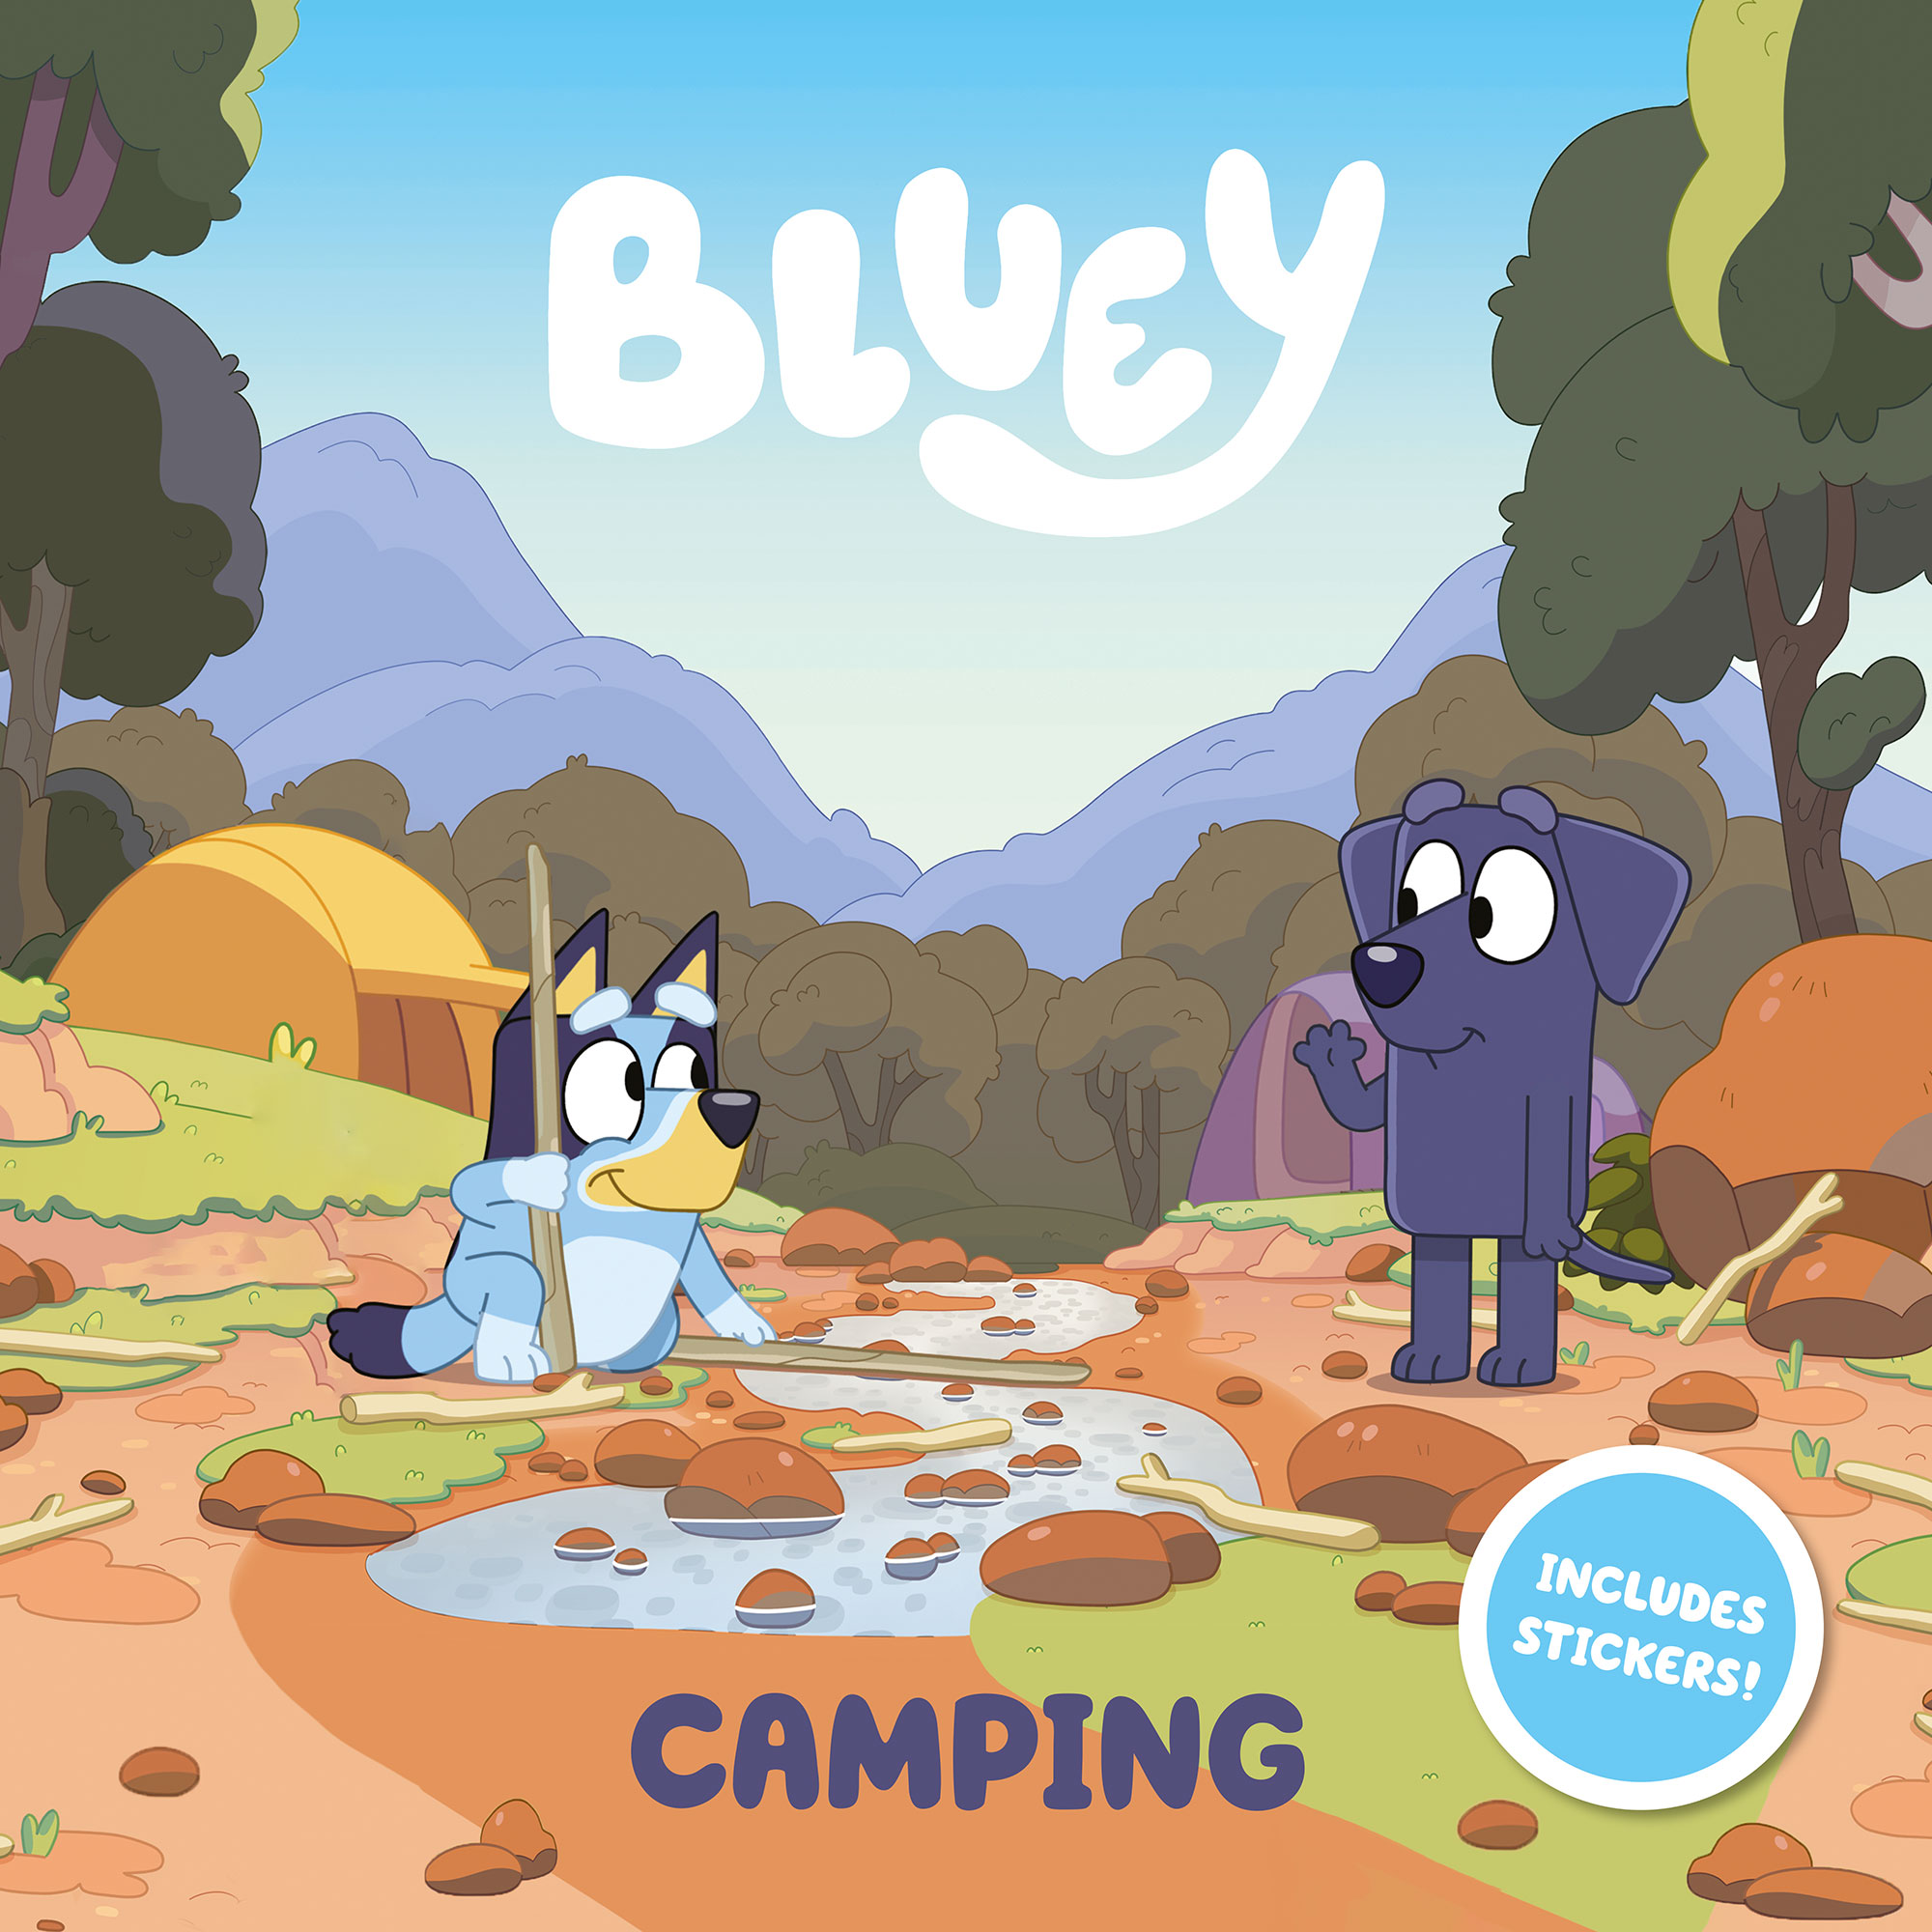 Bluey Camping Graphic Novel